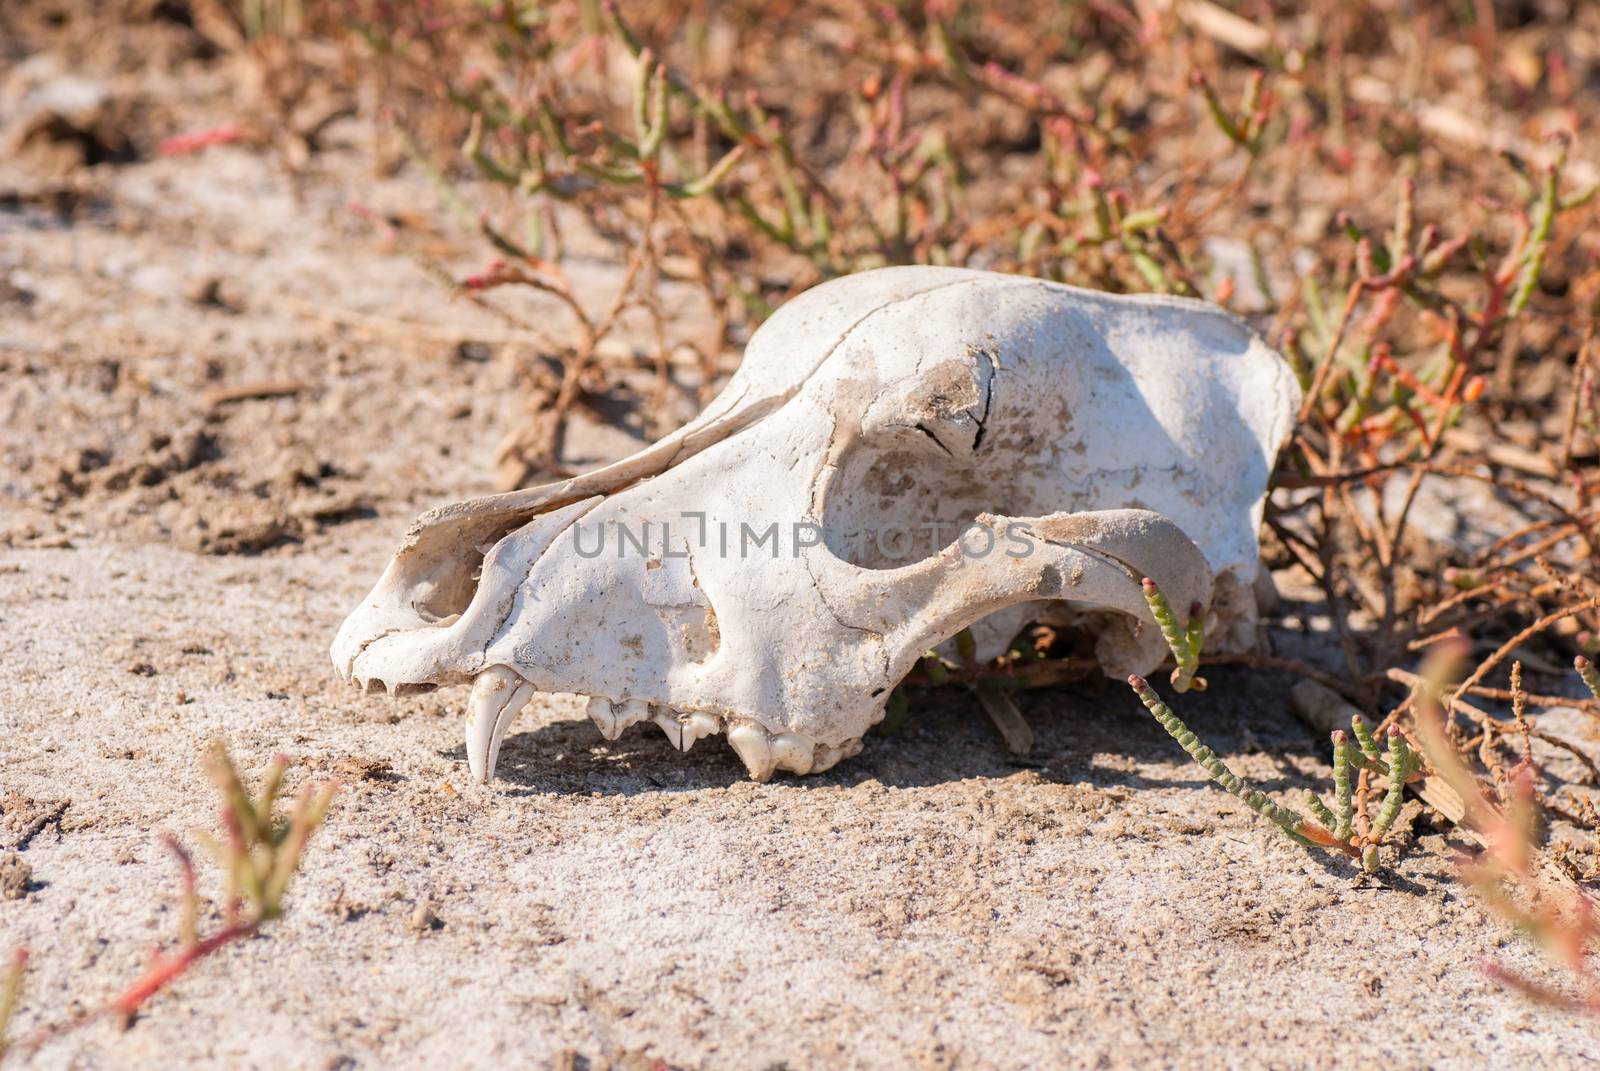 Old dog skull left in the grass